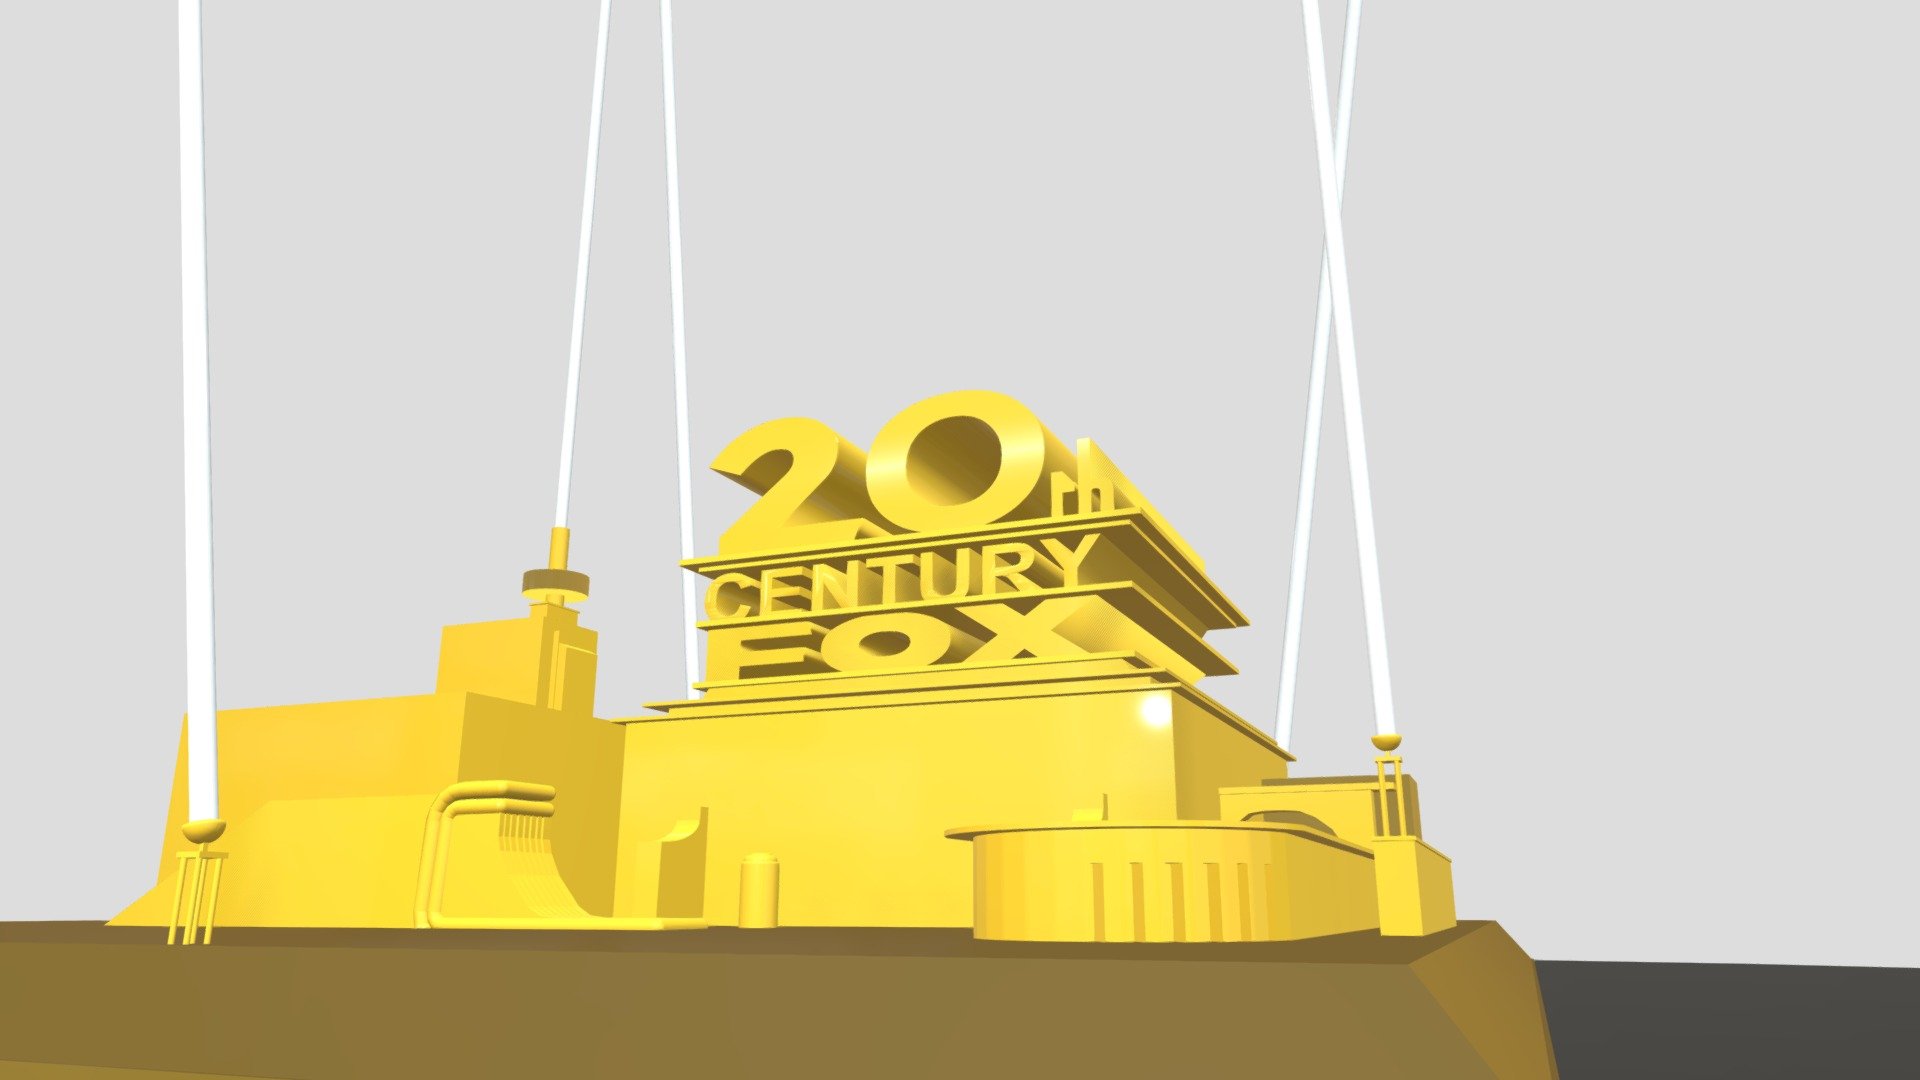 20th century fox logo elvolution - A 3D model collection by alexander81408  - Sketchfab